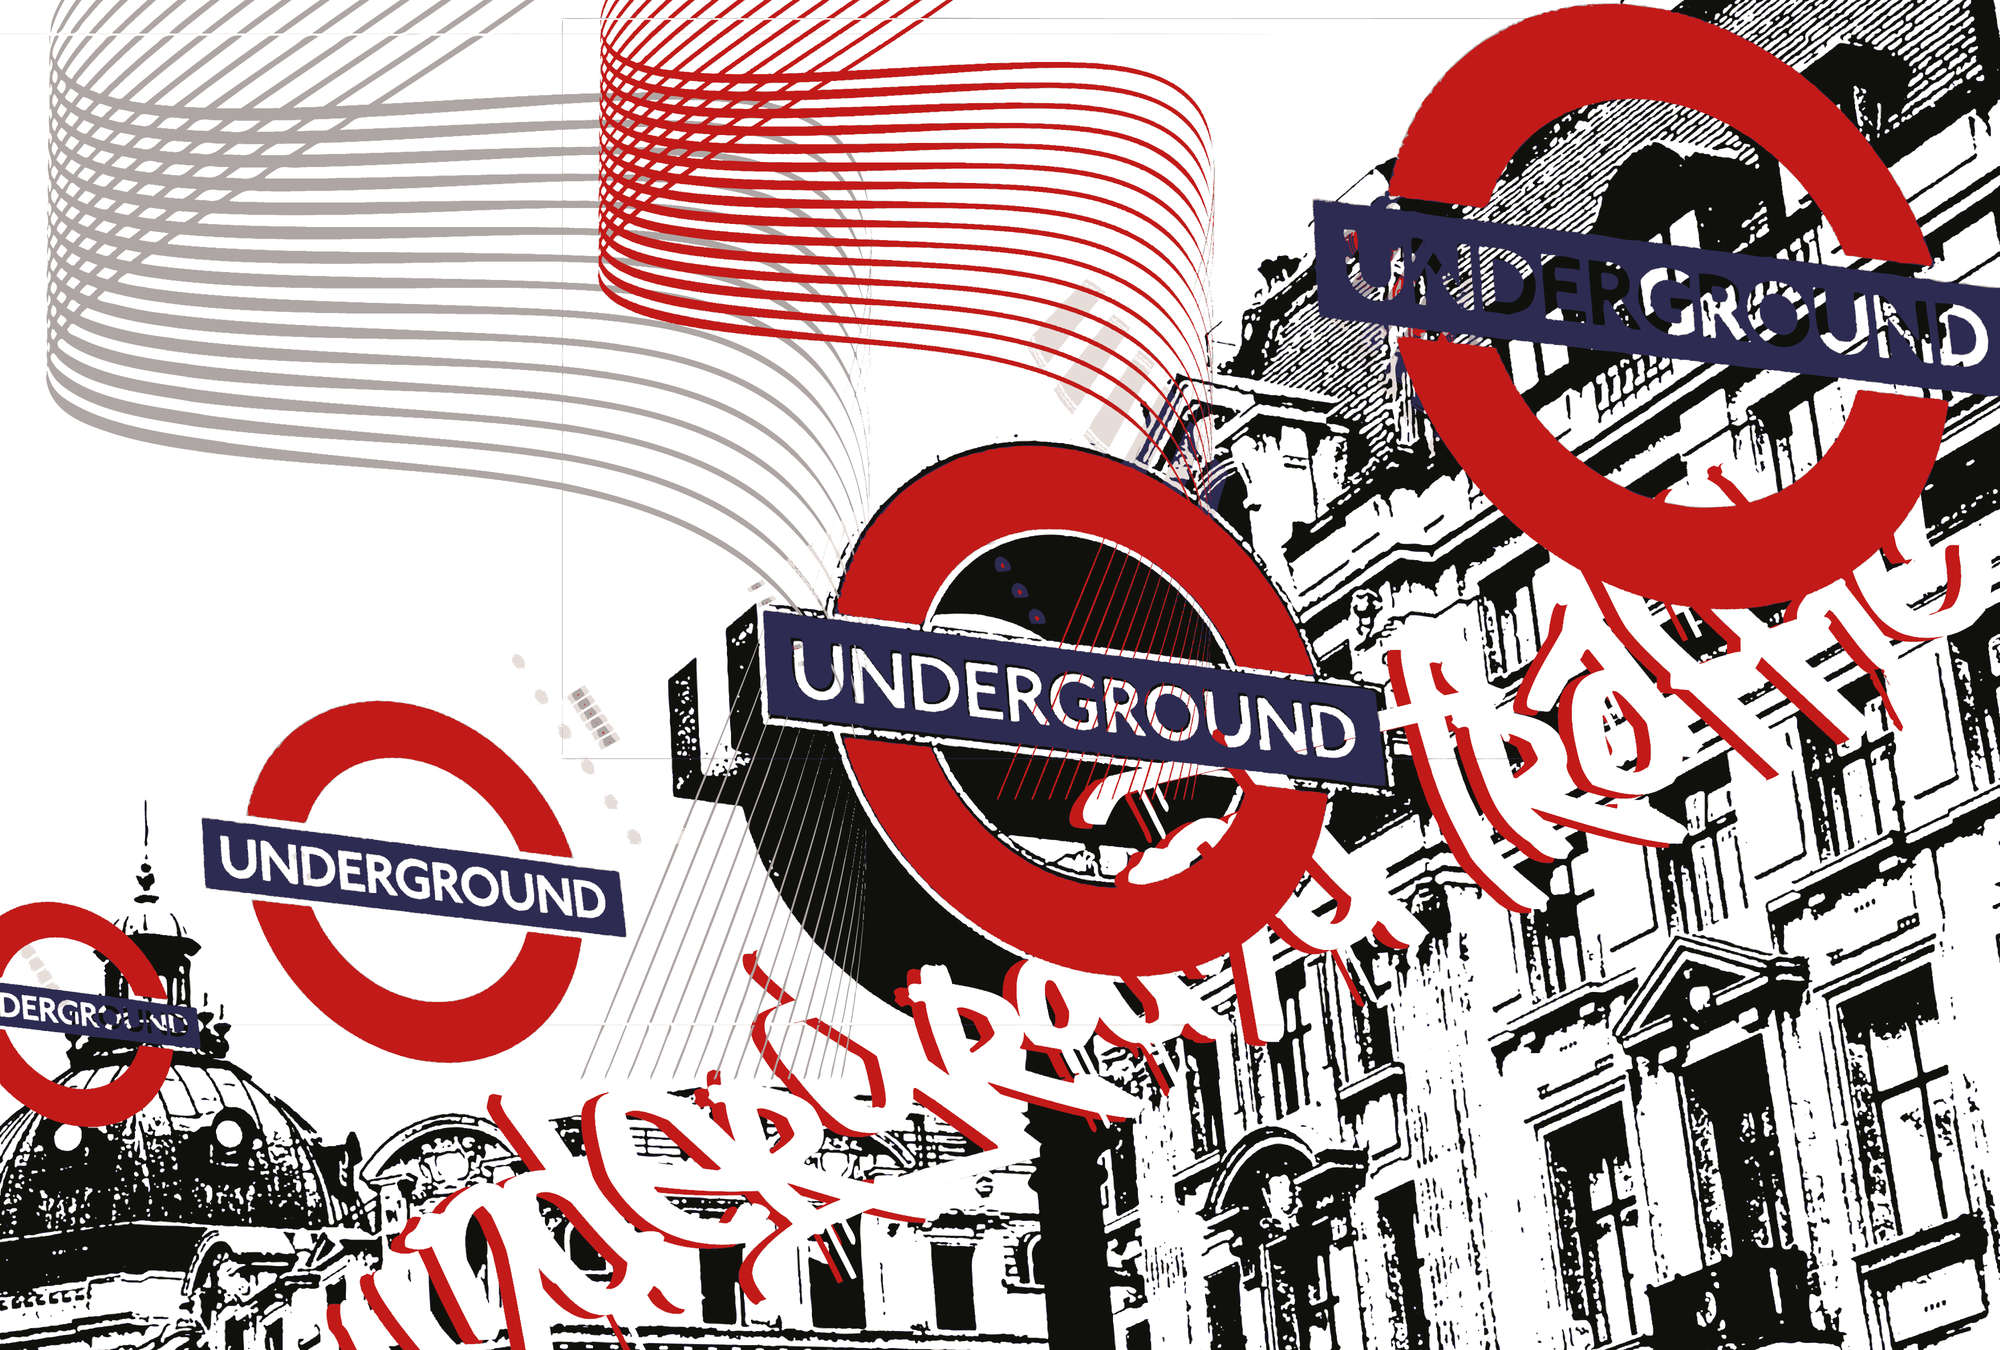             Underground – Fototapete London Style, Urban & Modern
        